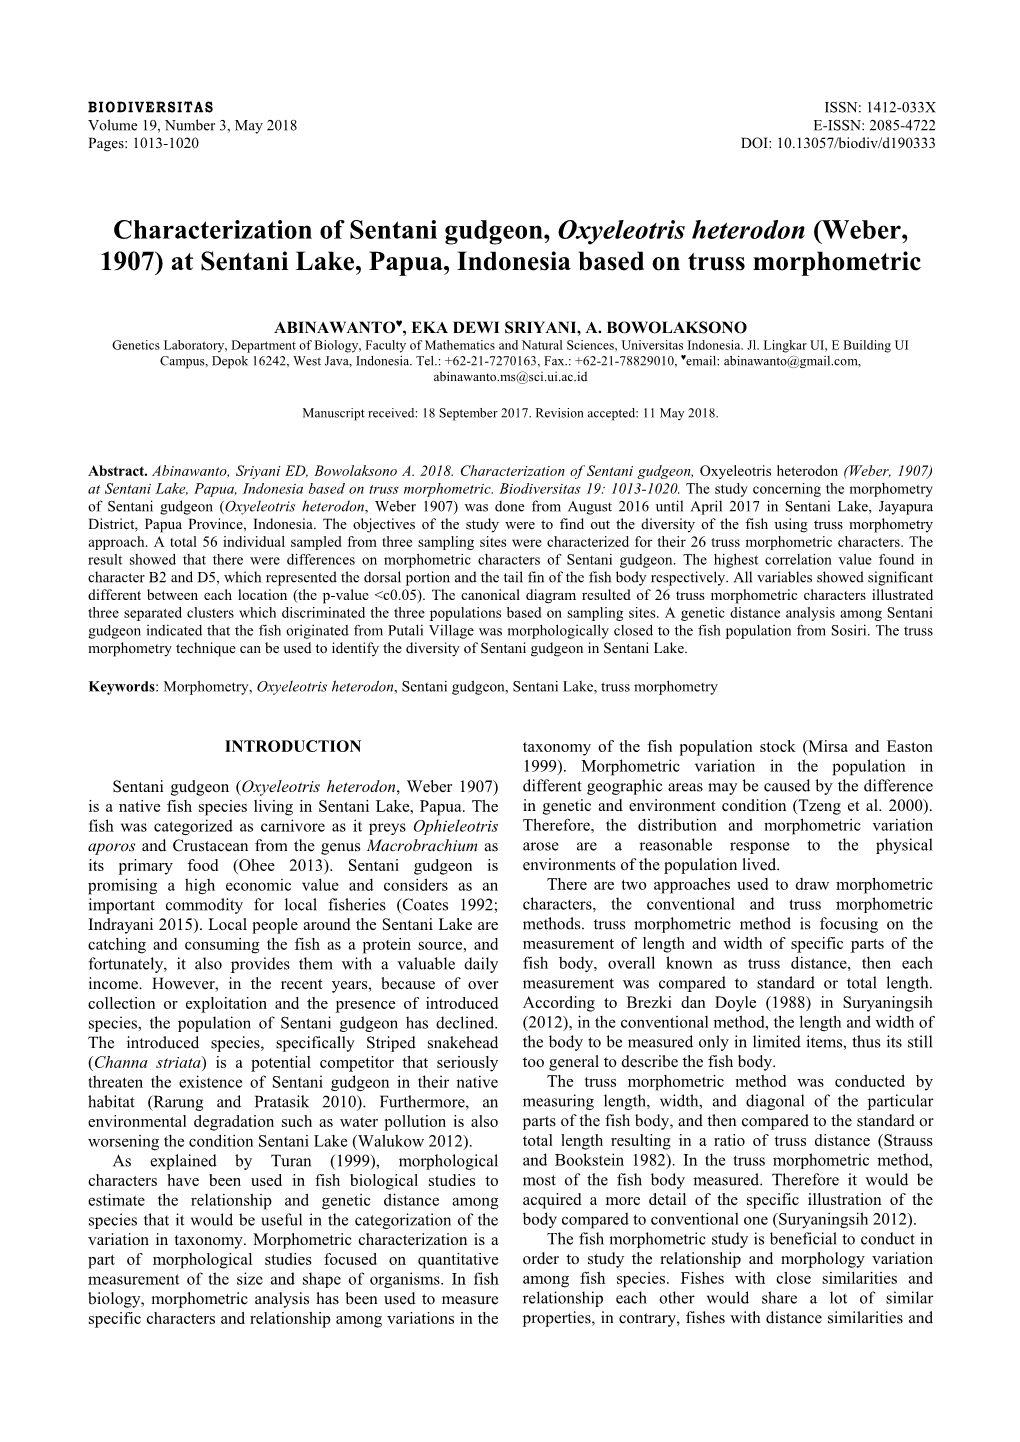 Characterization of Sentani Gudgeon, Oxyeleotris Heterodon (Weber, 1907) at Sentani Lake, Papua, Indonesia Based on Truss Morphometric